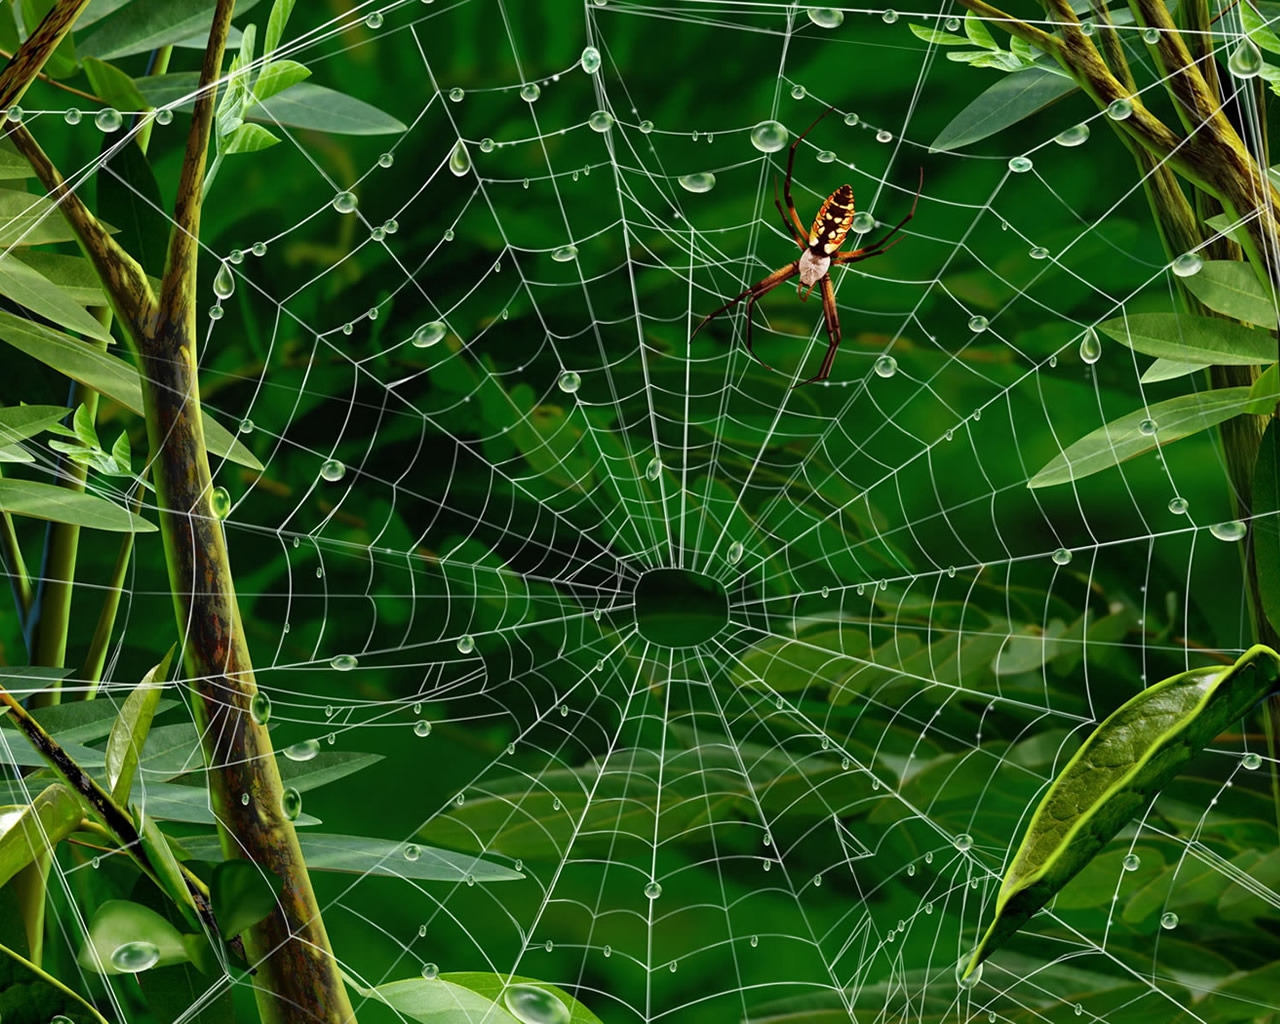 Spider walking for 1280 x 1024 resolution